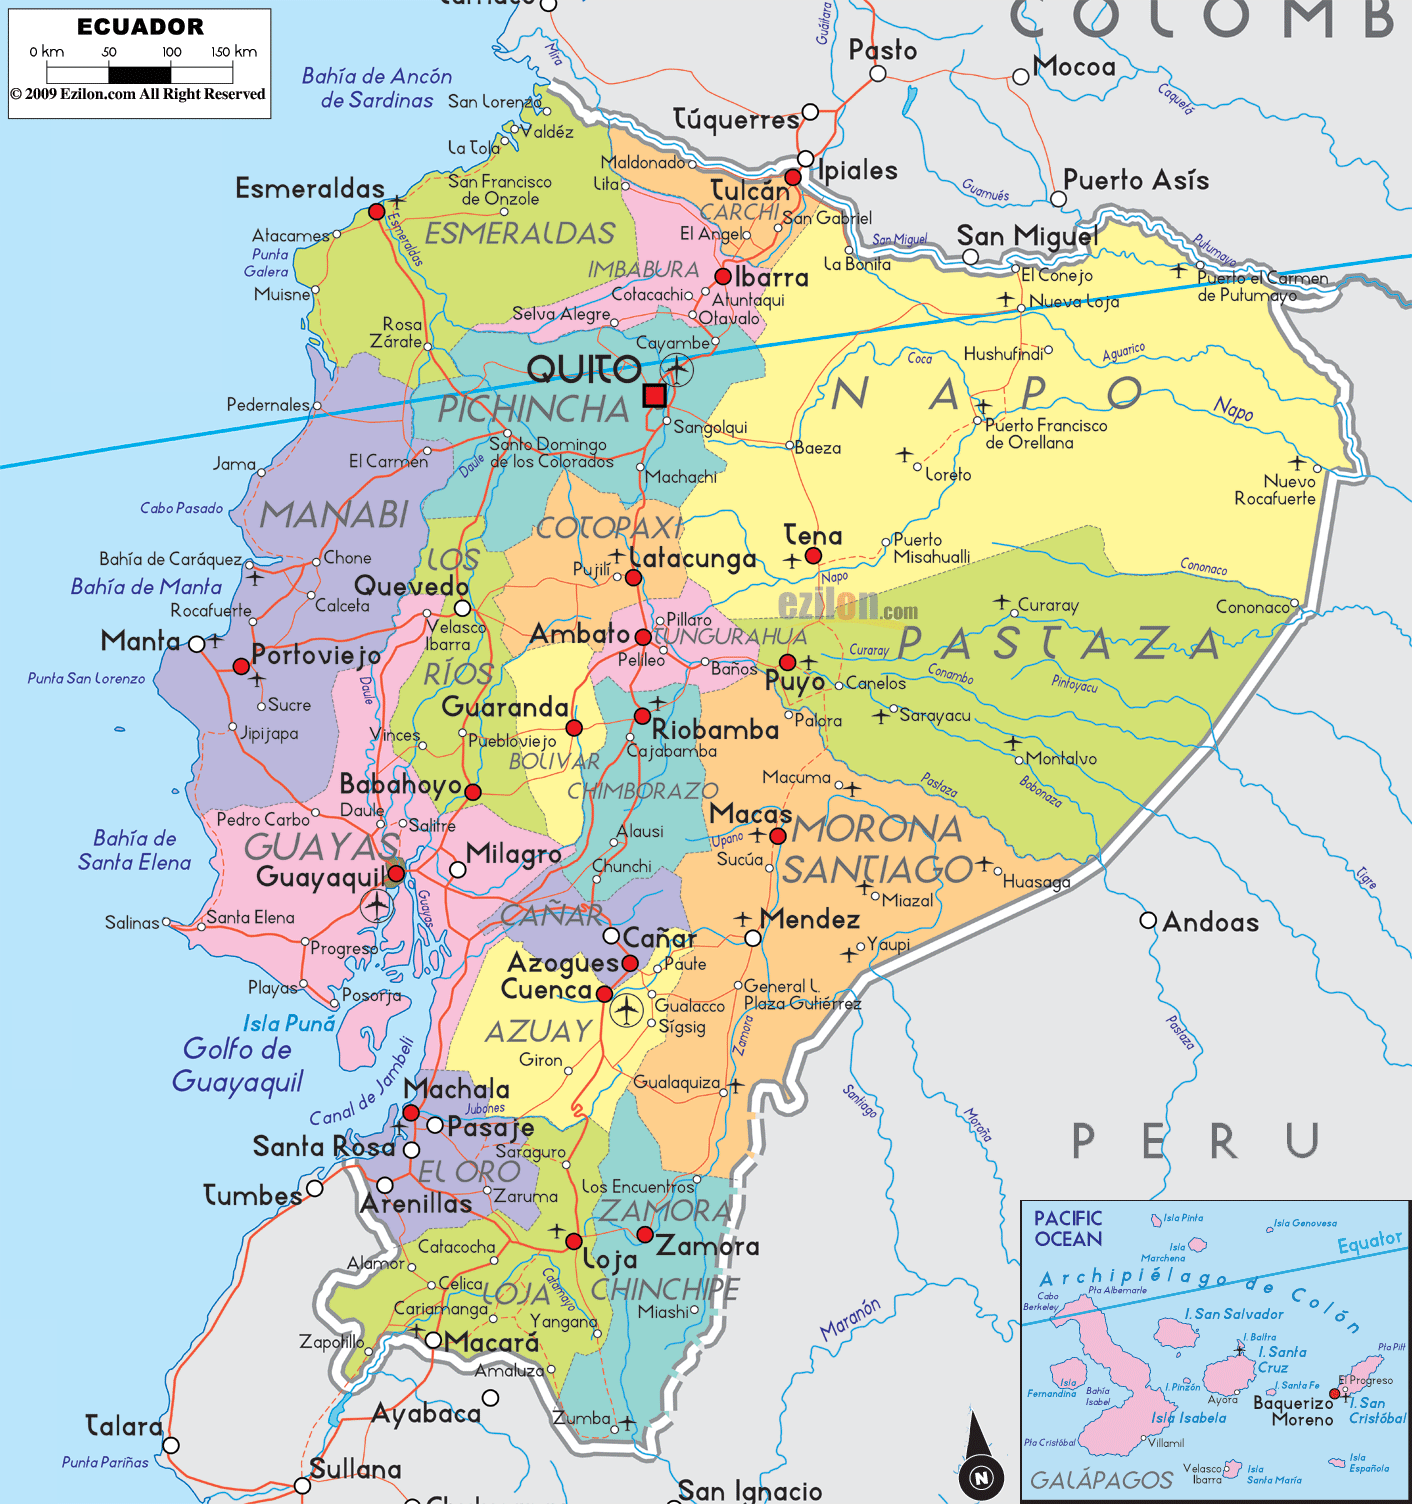 Map of Ecuador_0.jpg